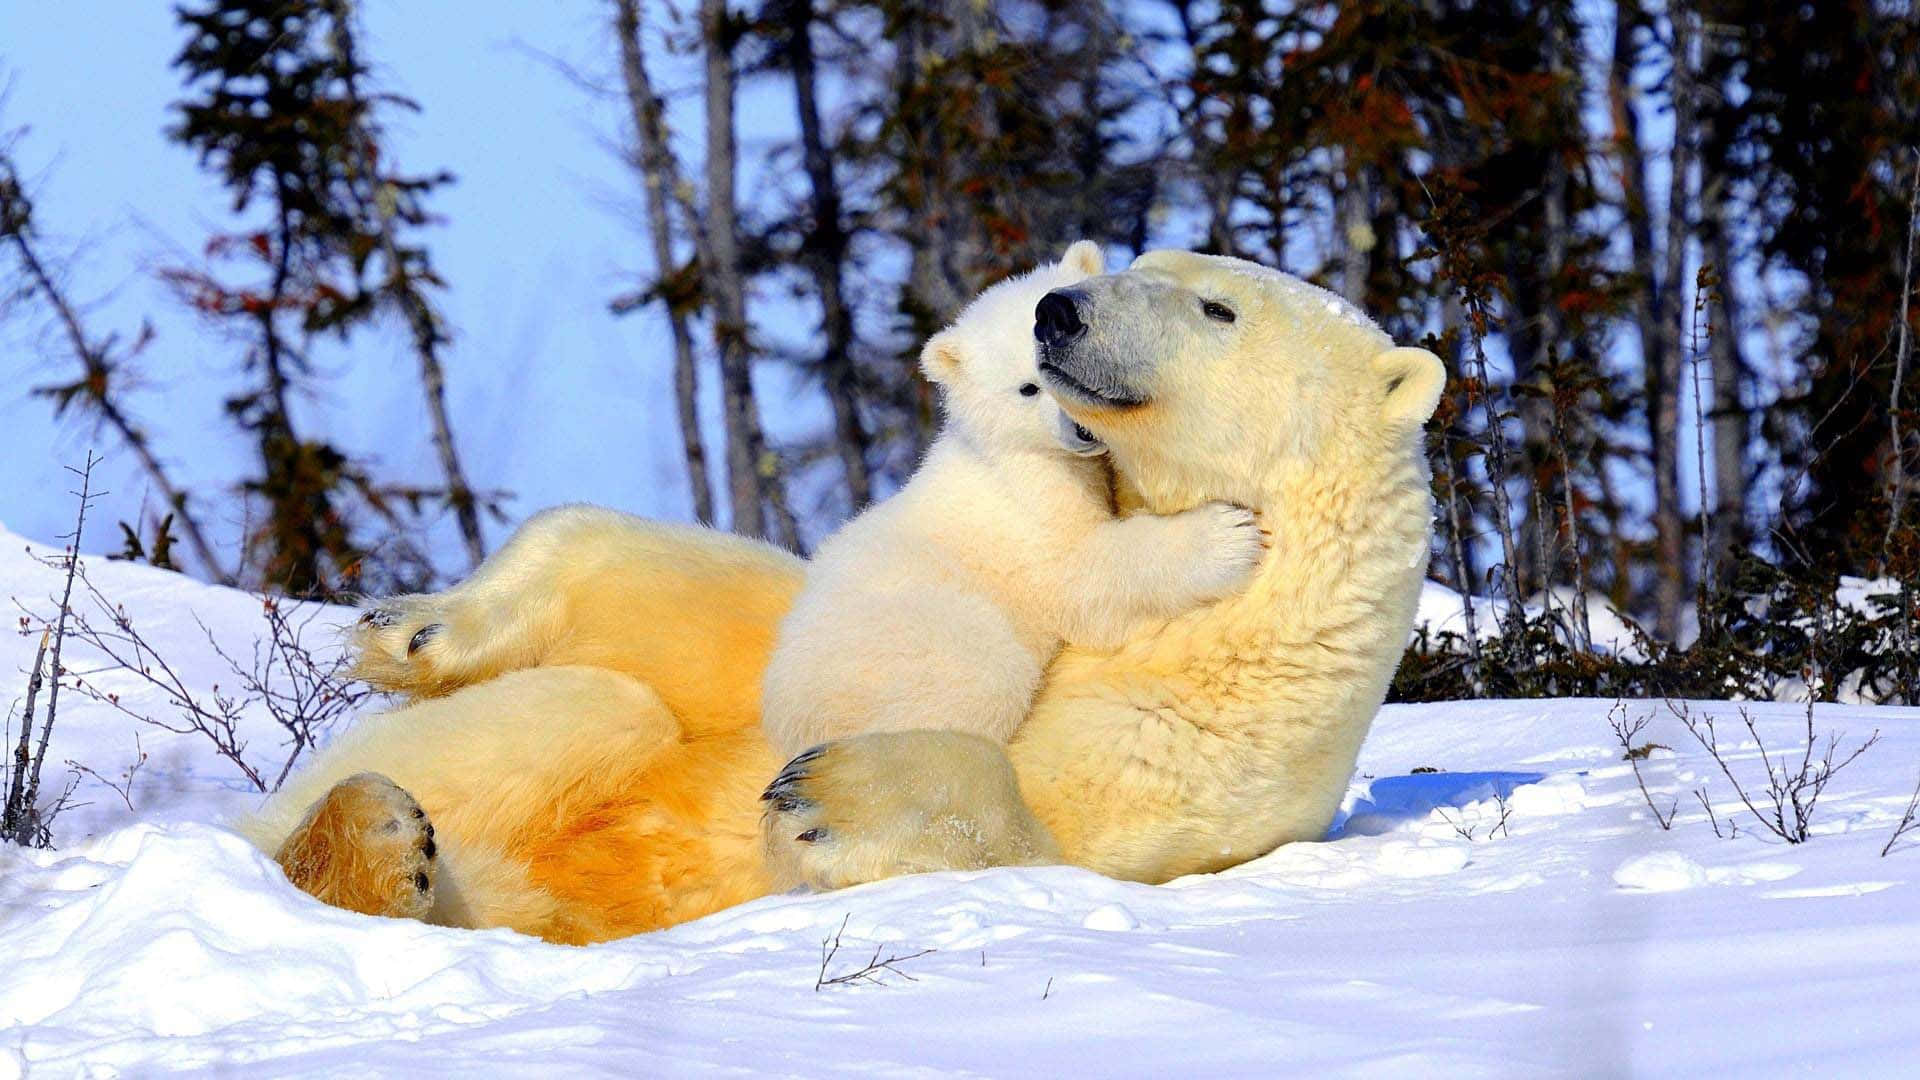 A close up of a Polar Bear in its natural habitat